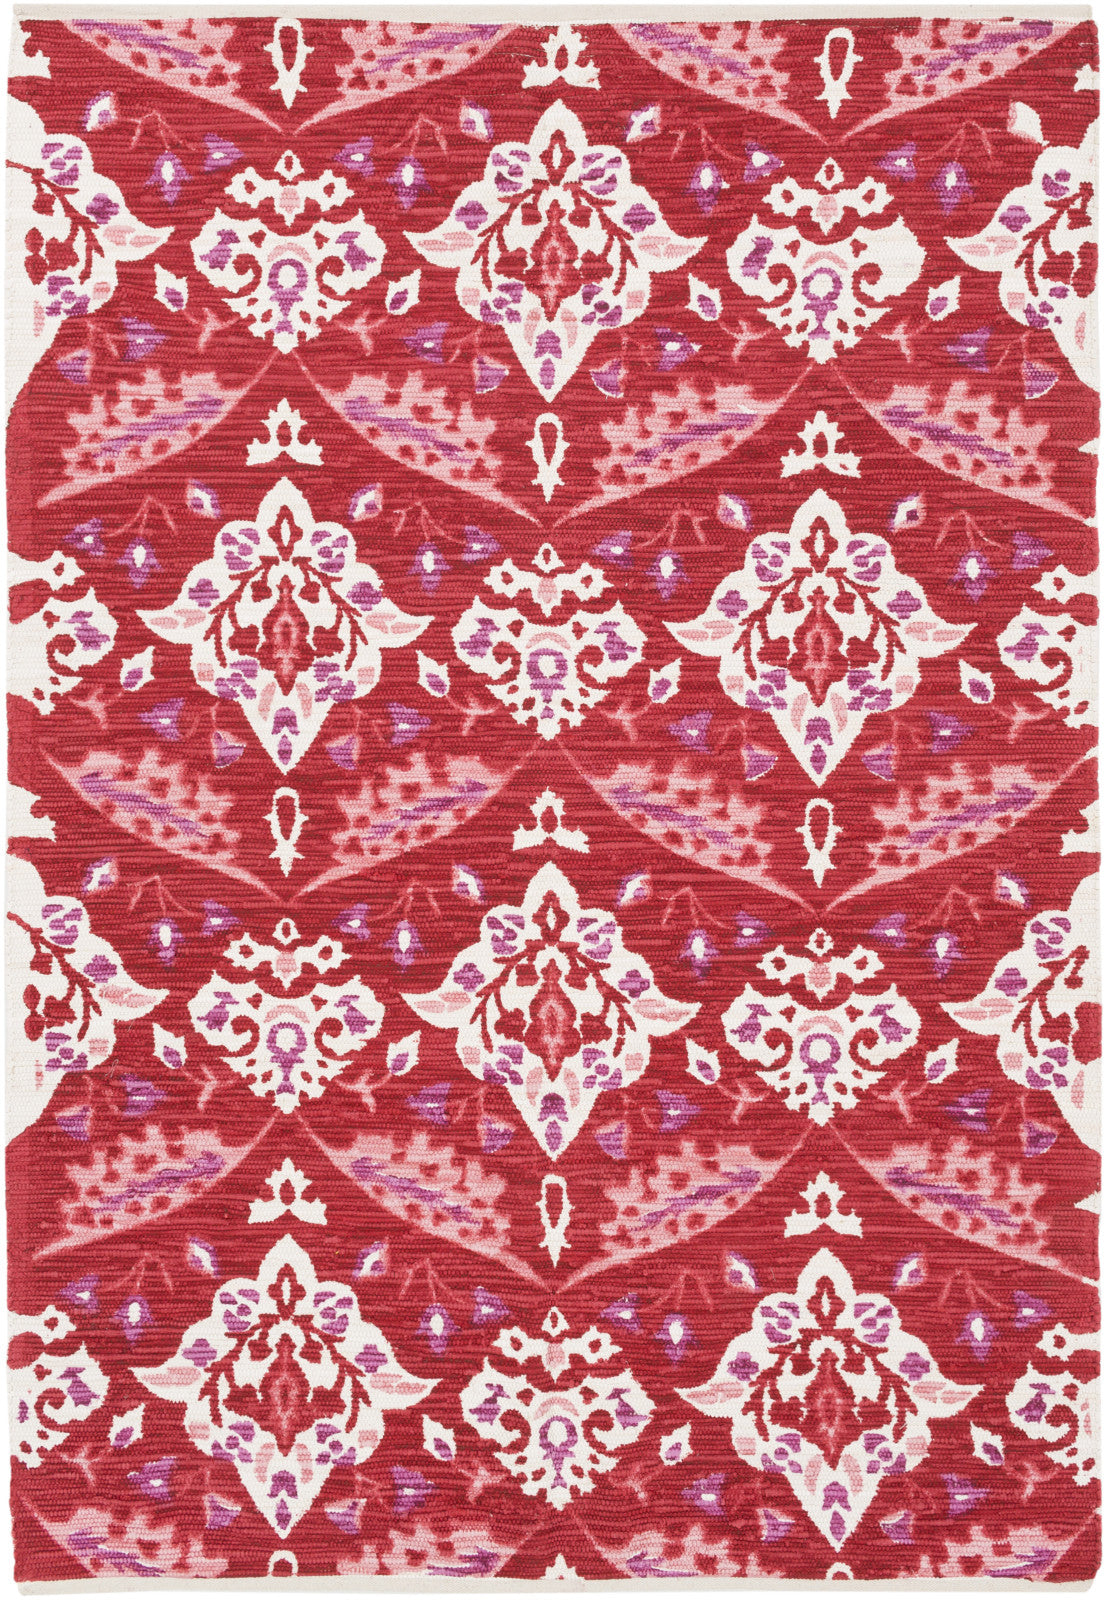 Artistic Weavers Elaine Wyatt Crimson Red/Light Pink Multi Area Rug main image